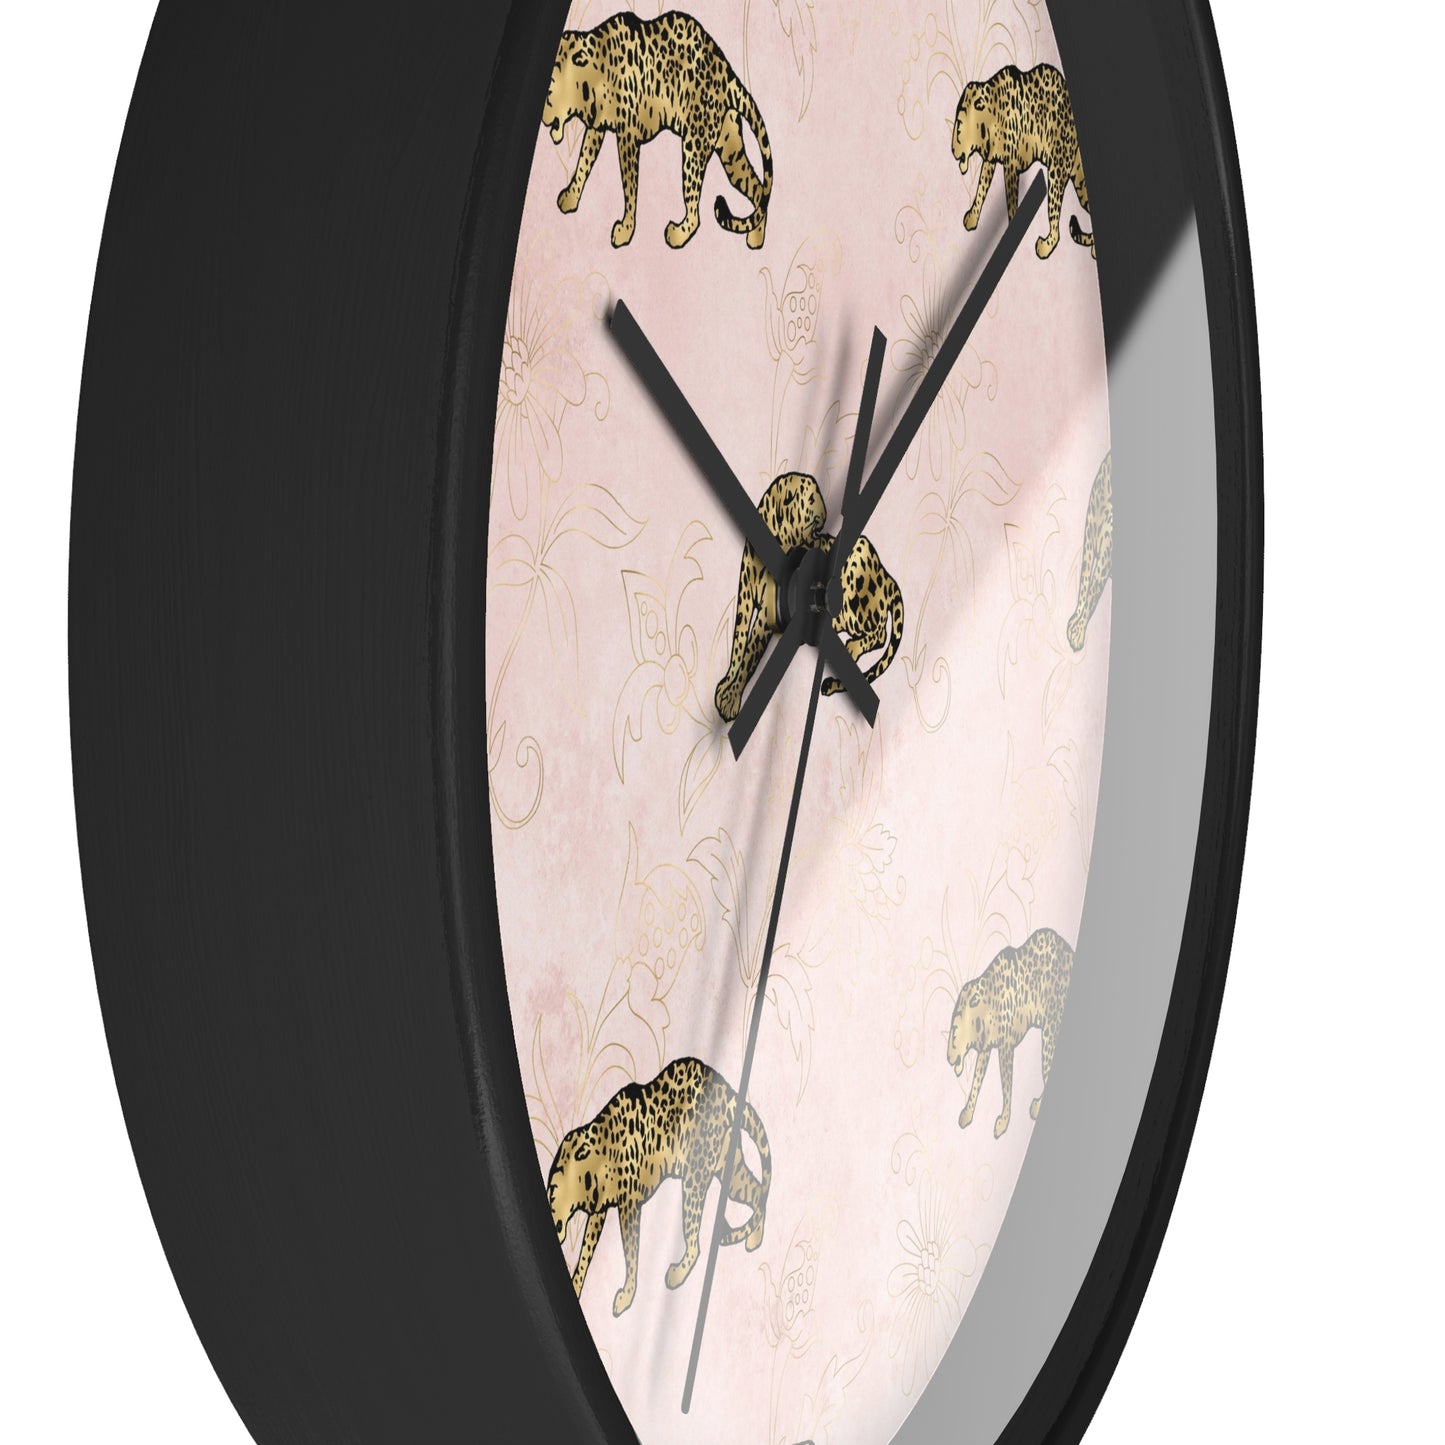 Leopard Design Wall Clock